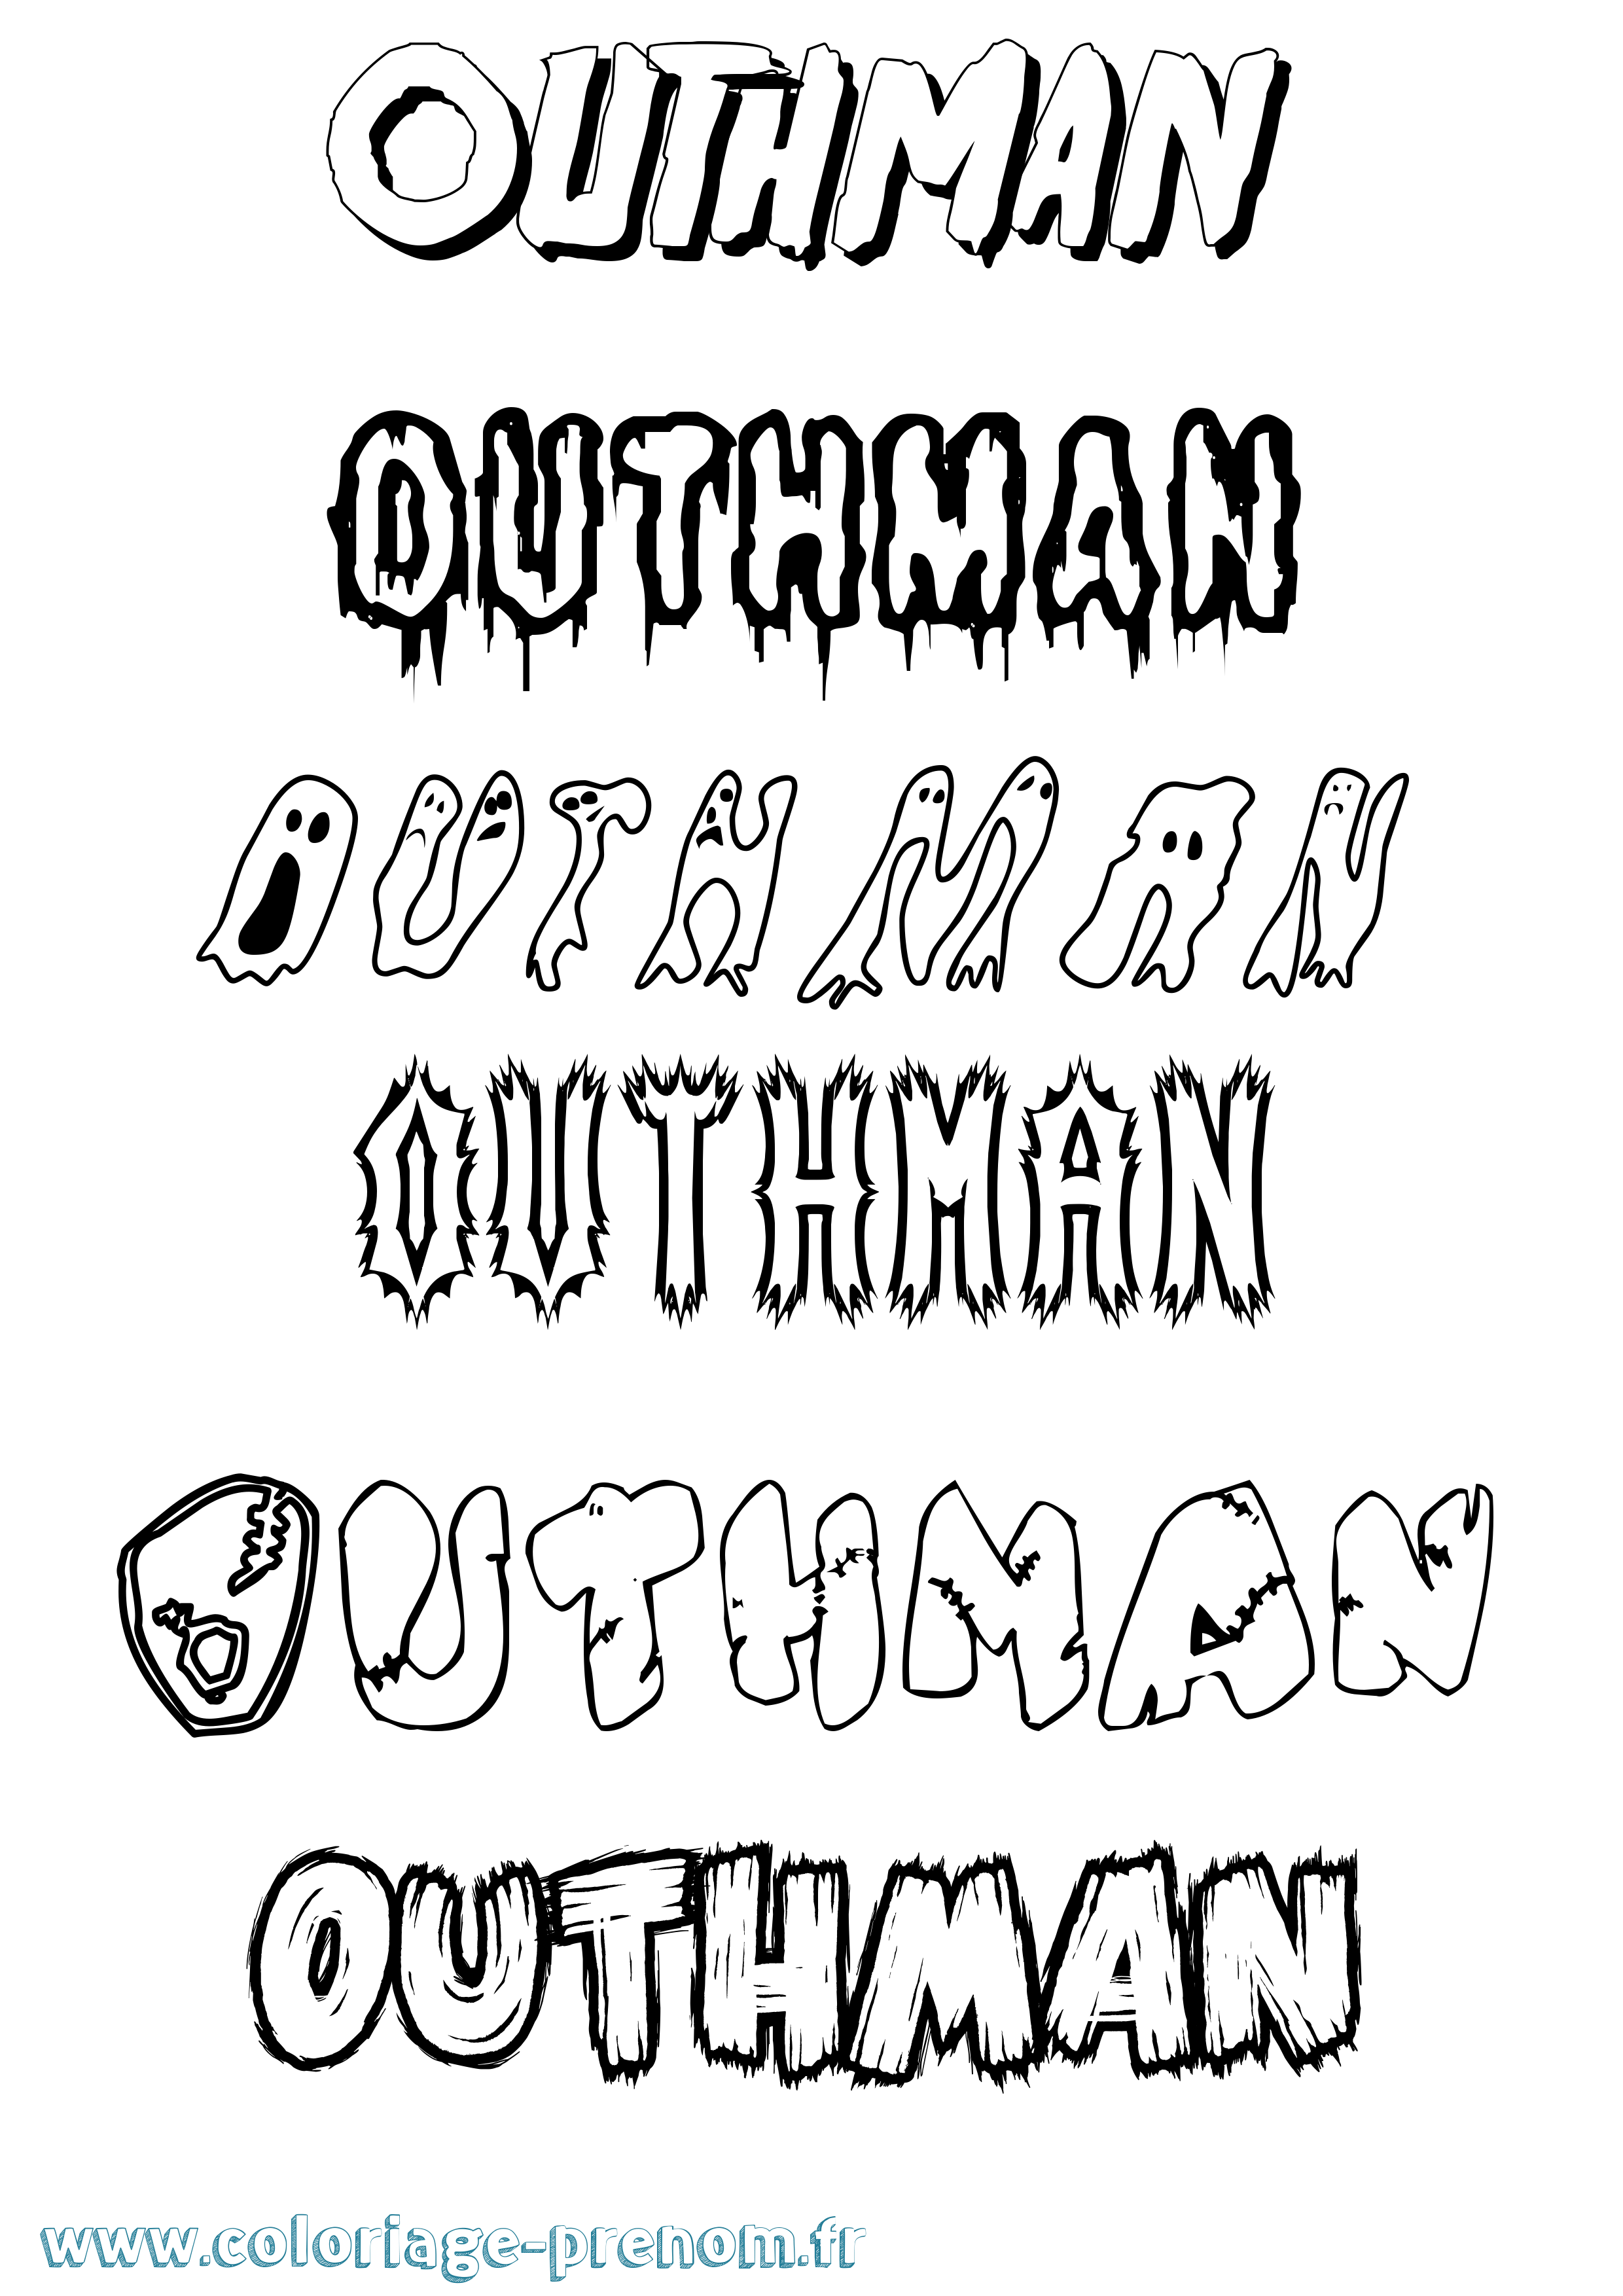 Coloriage prénom Outhman Frisson